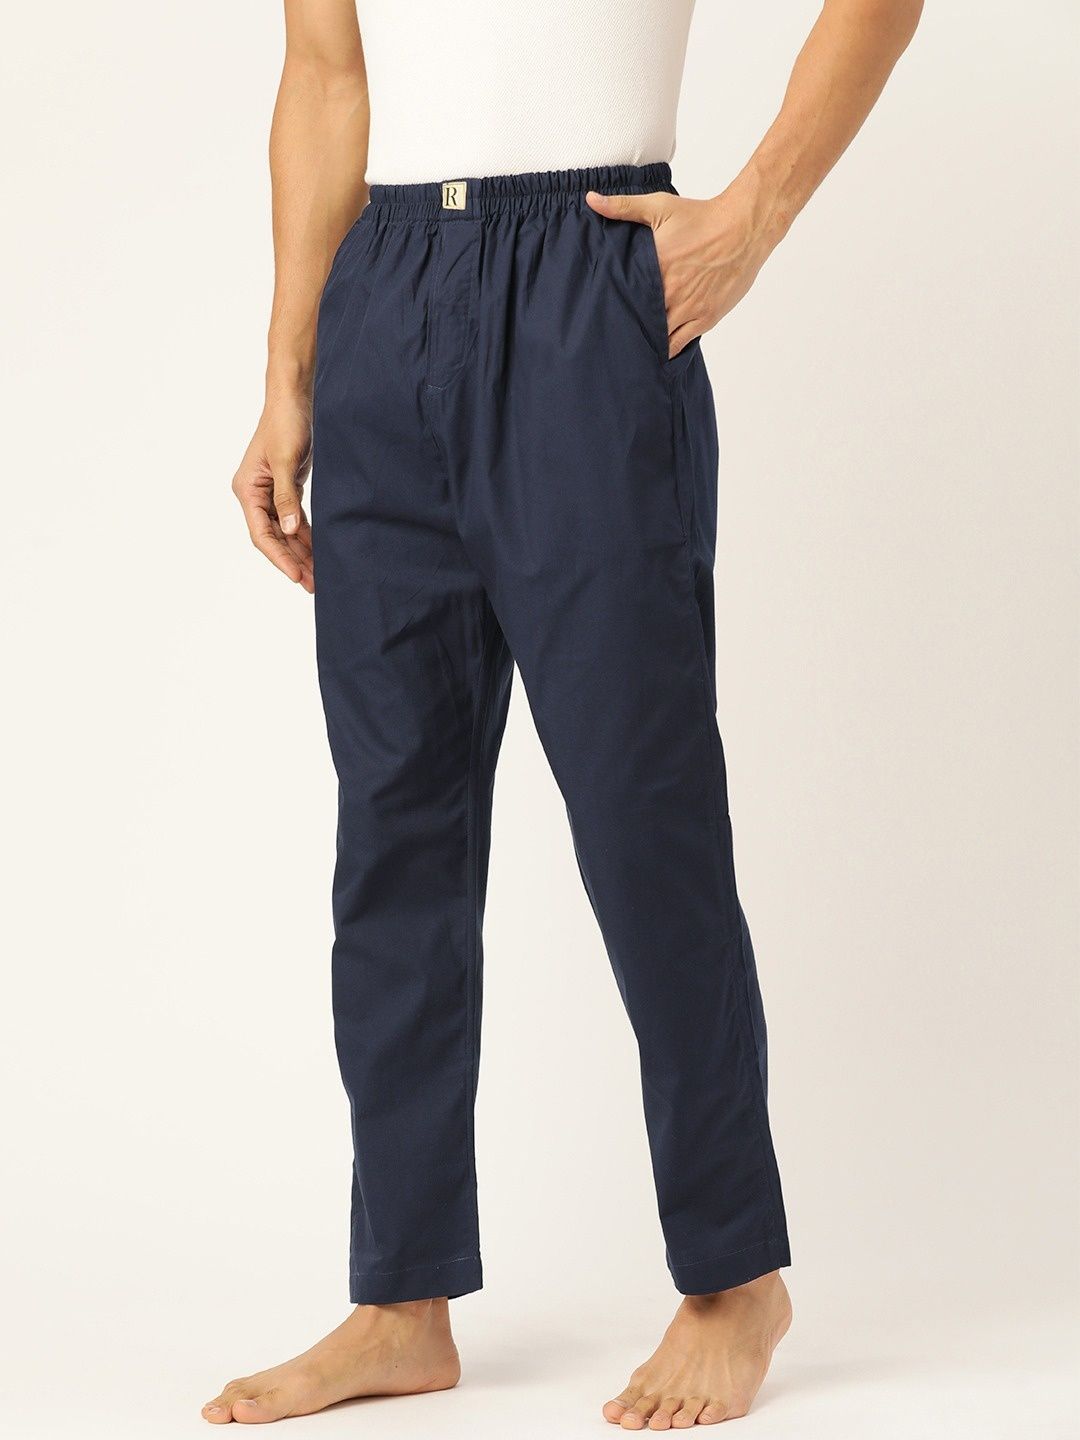 Navy Pure Cotton Elastic Lounge Wear Pajama Pant Online In India Color Blue SizeShirt  M Pyjama Length 38